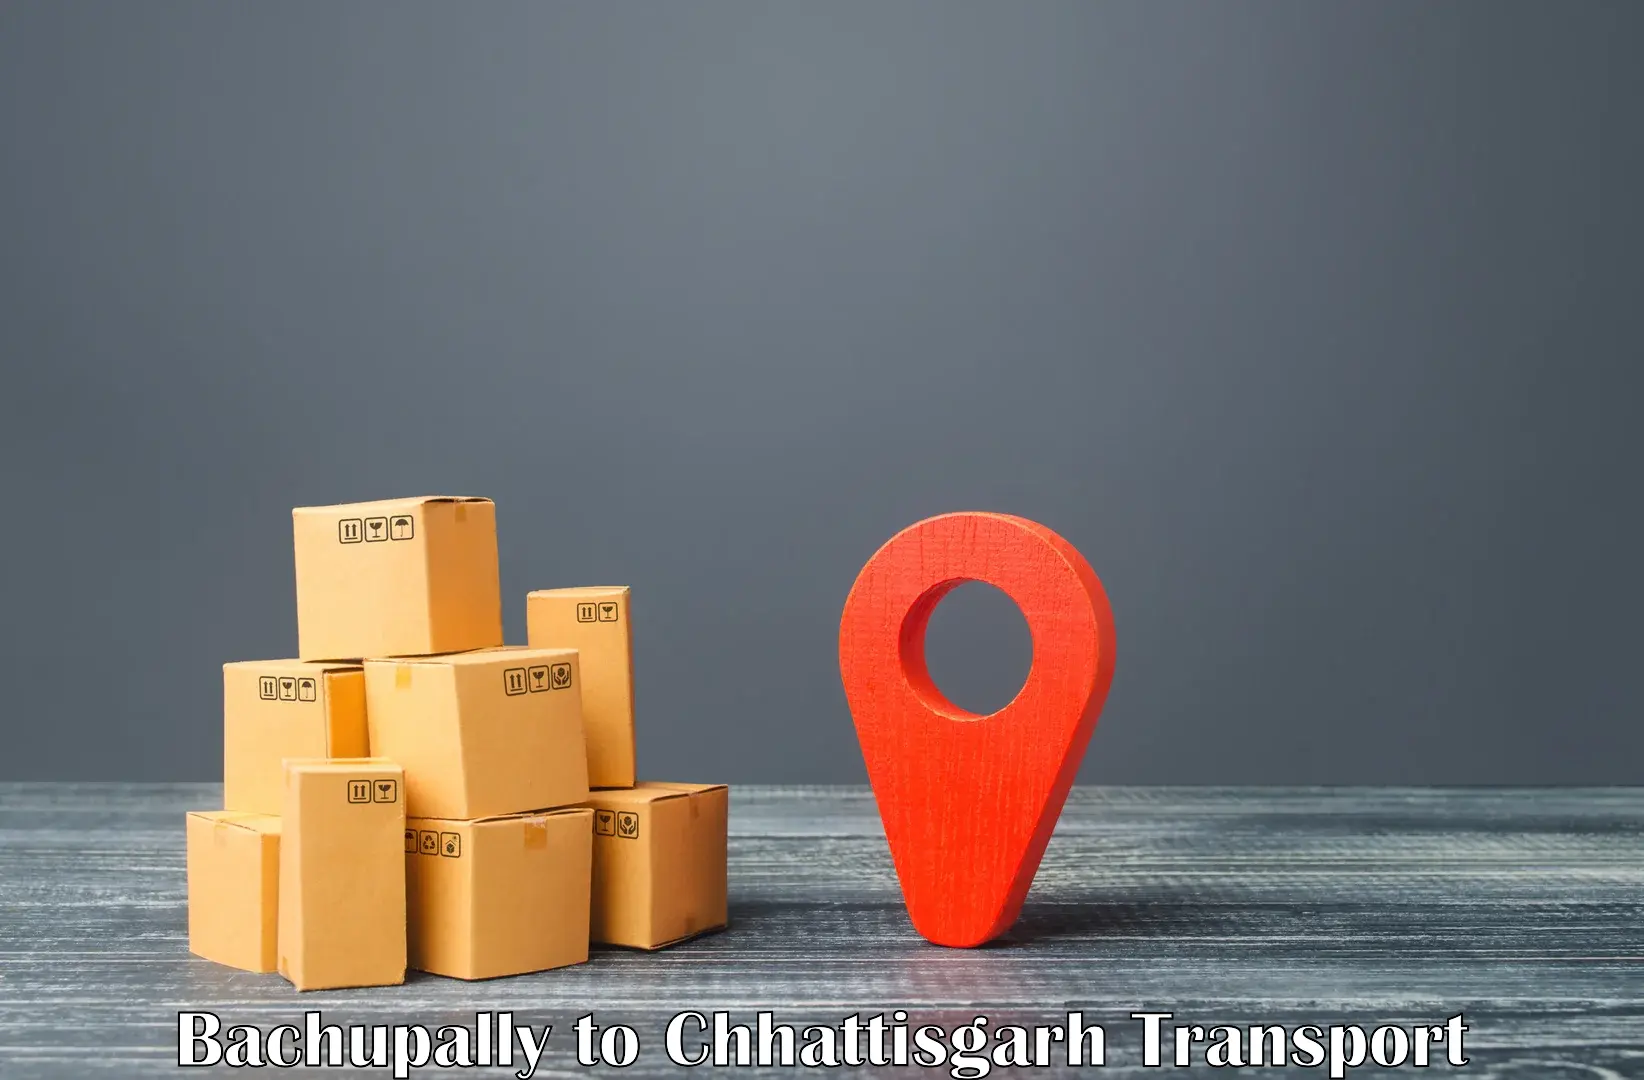 Container transport service Bachupally to Patna Chhattisgarh